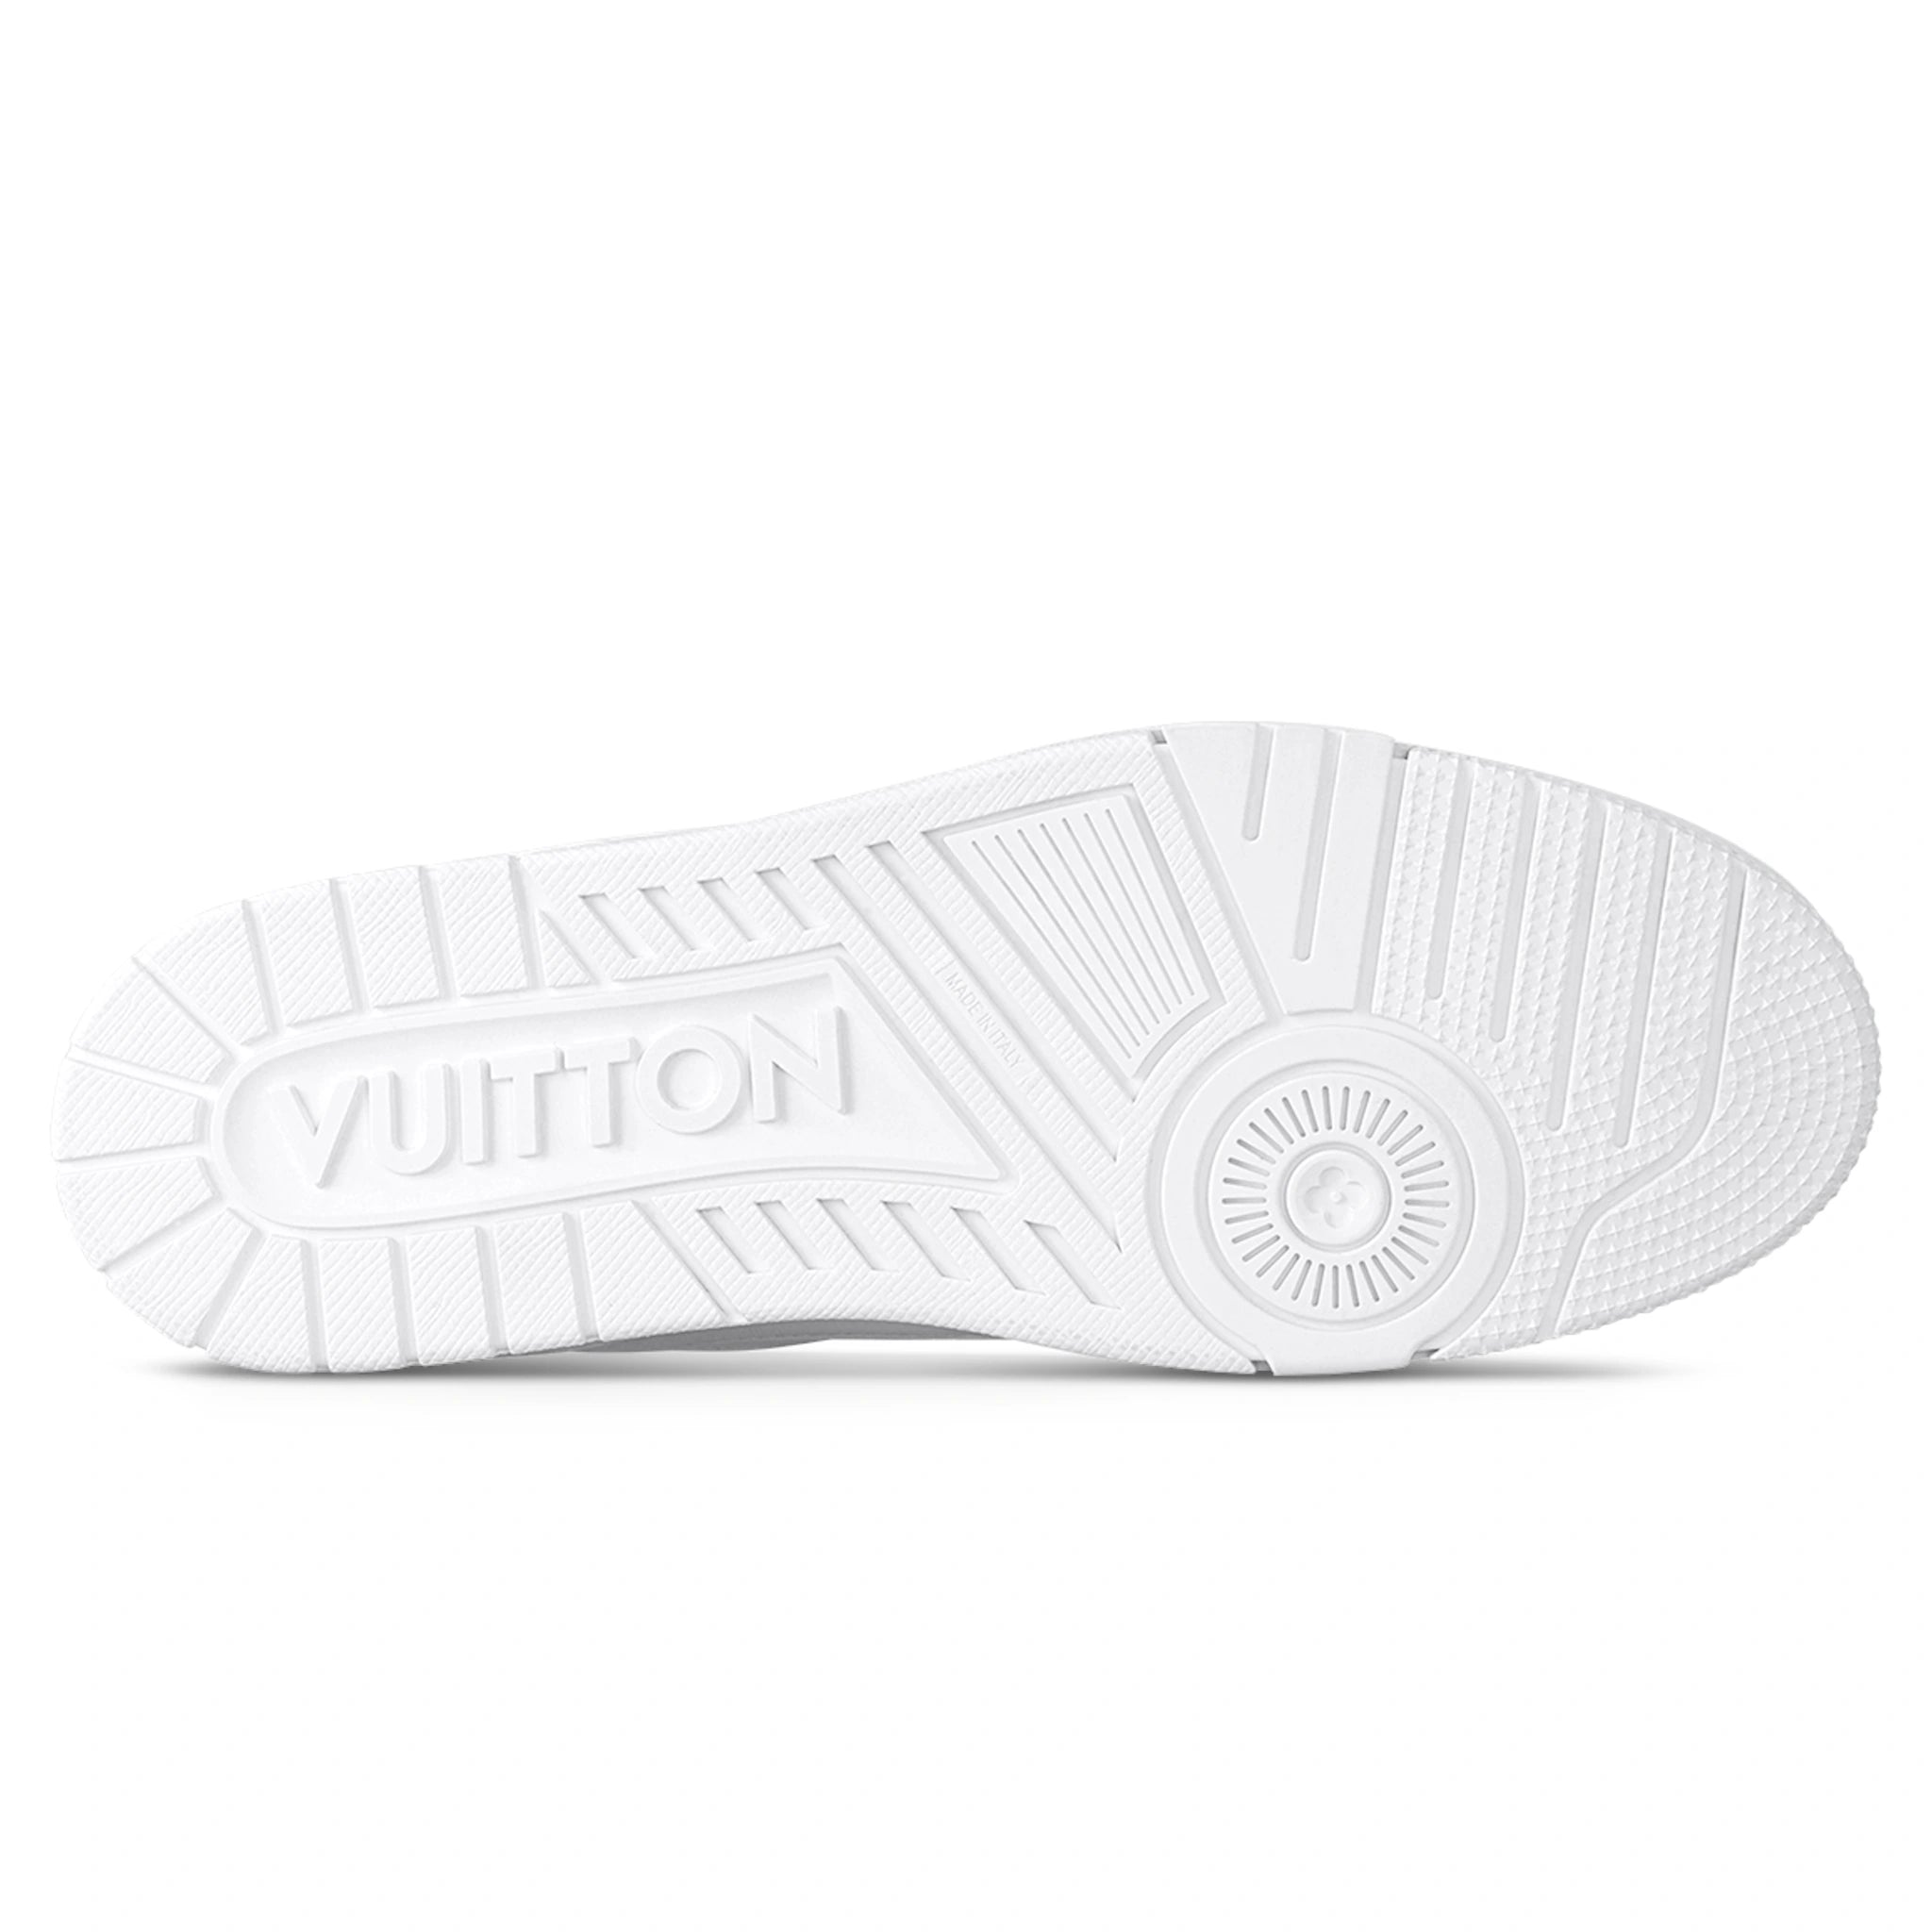 Sole view of Louis Vuitton LV White Sneaker 1A9G59